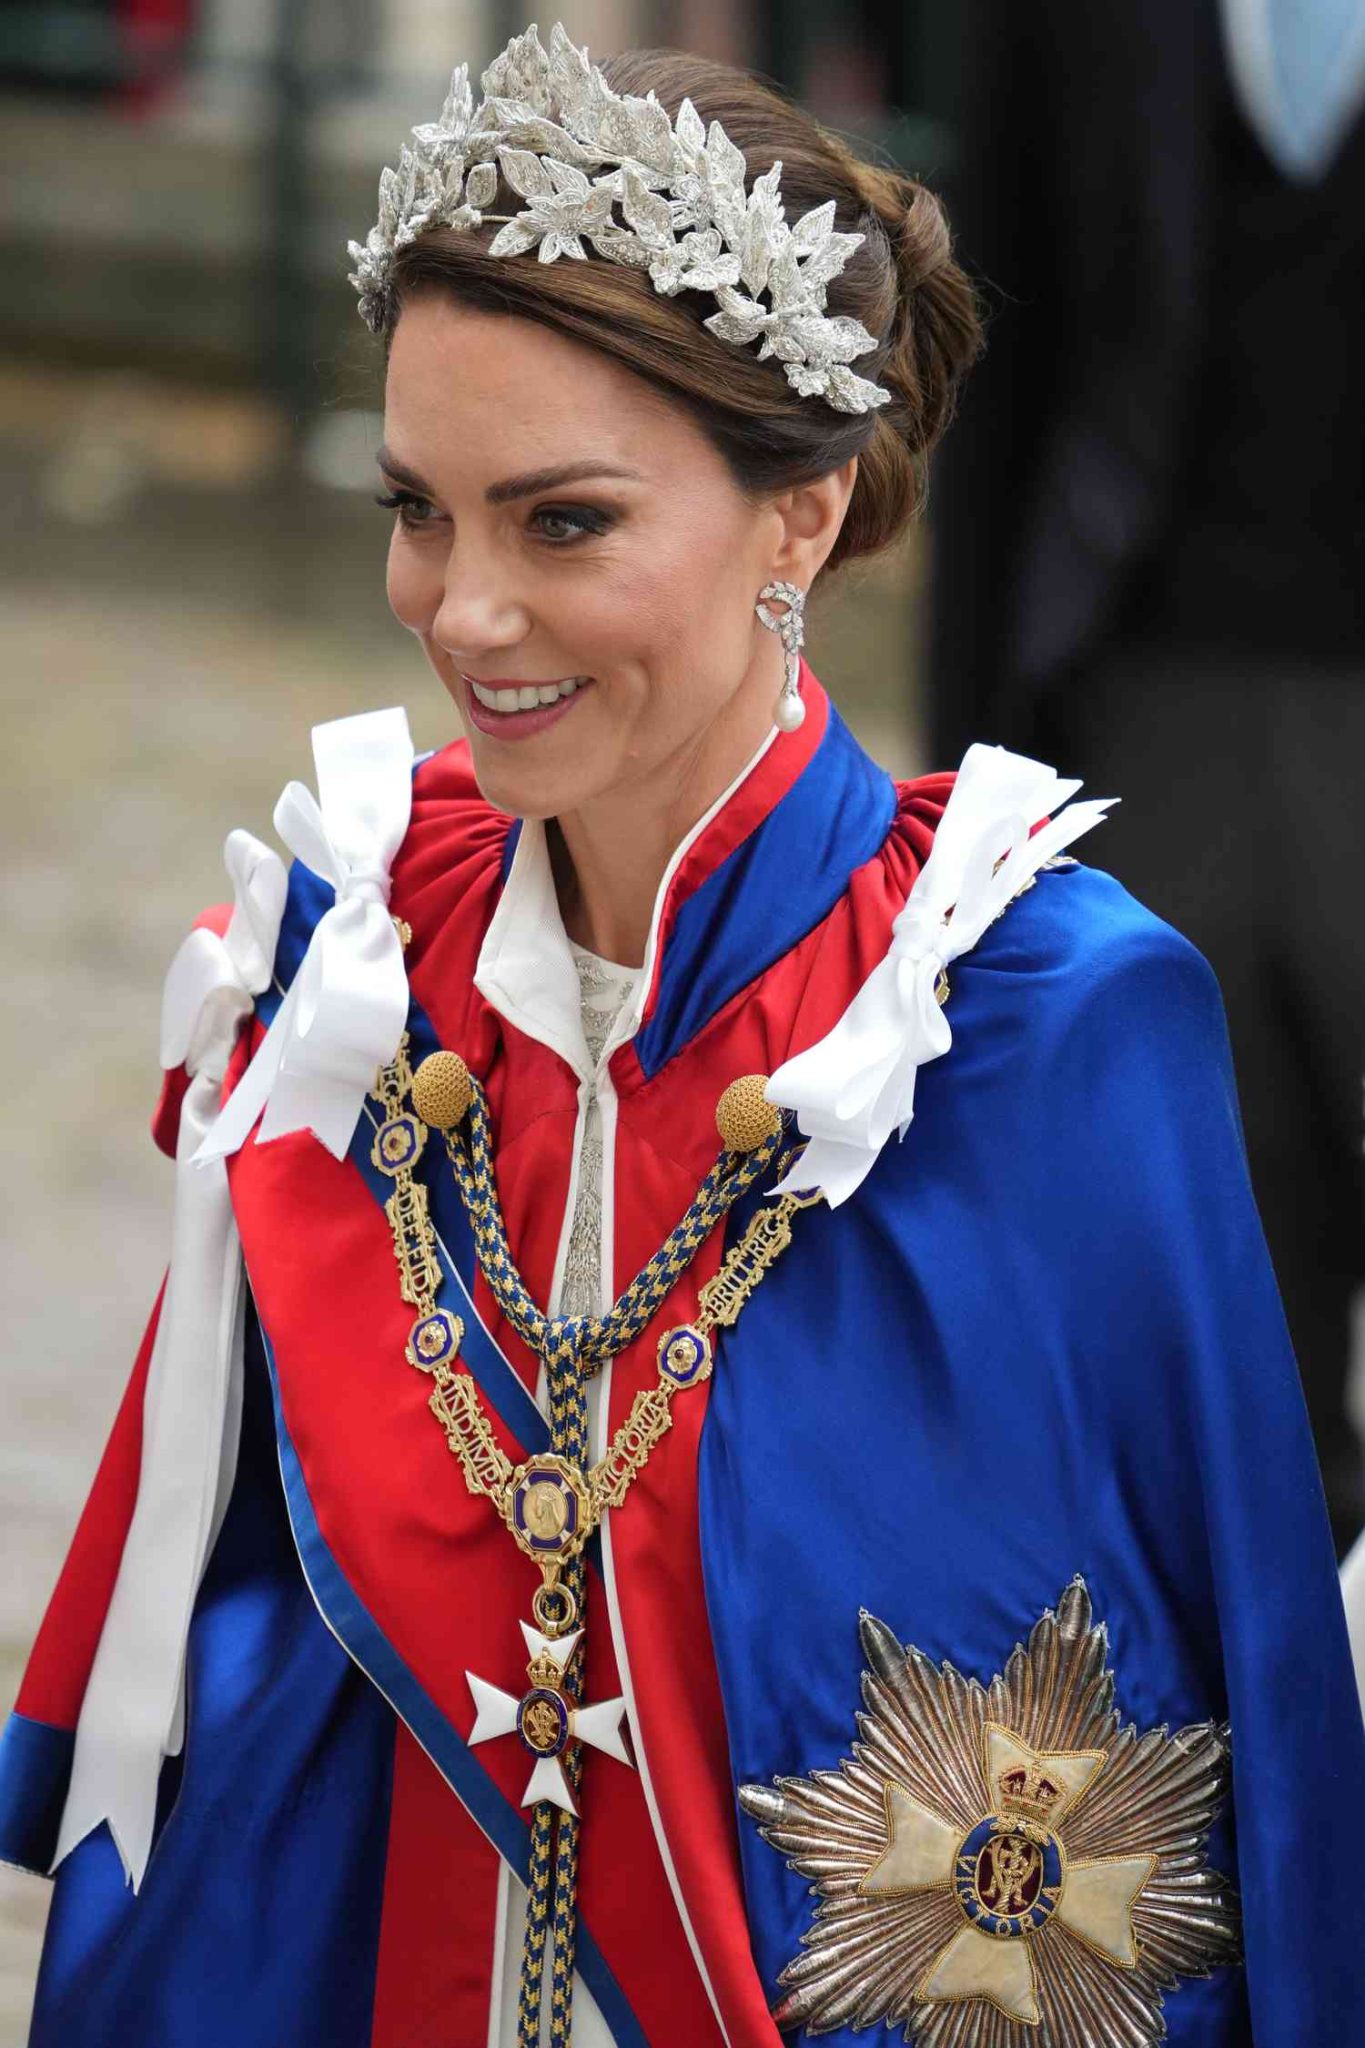 PHOTOS: Princess Kate Stuns in Alexander McQueen Dress, Royal Jewels